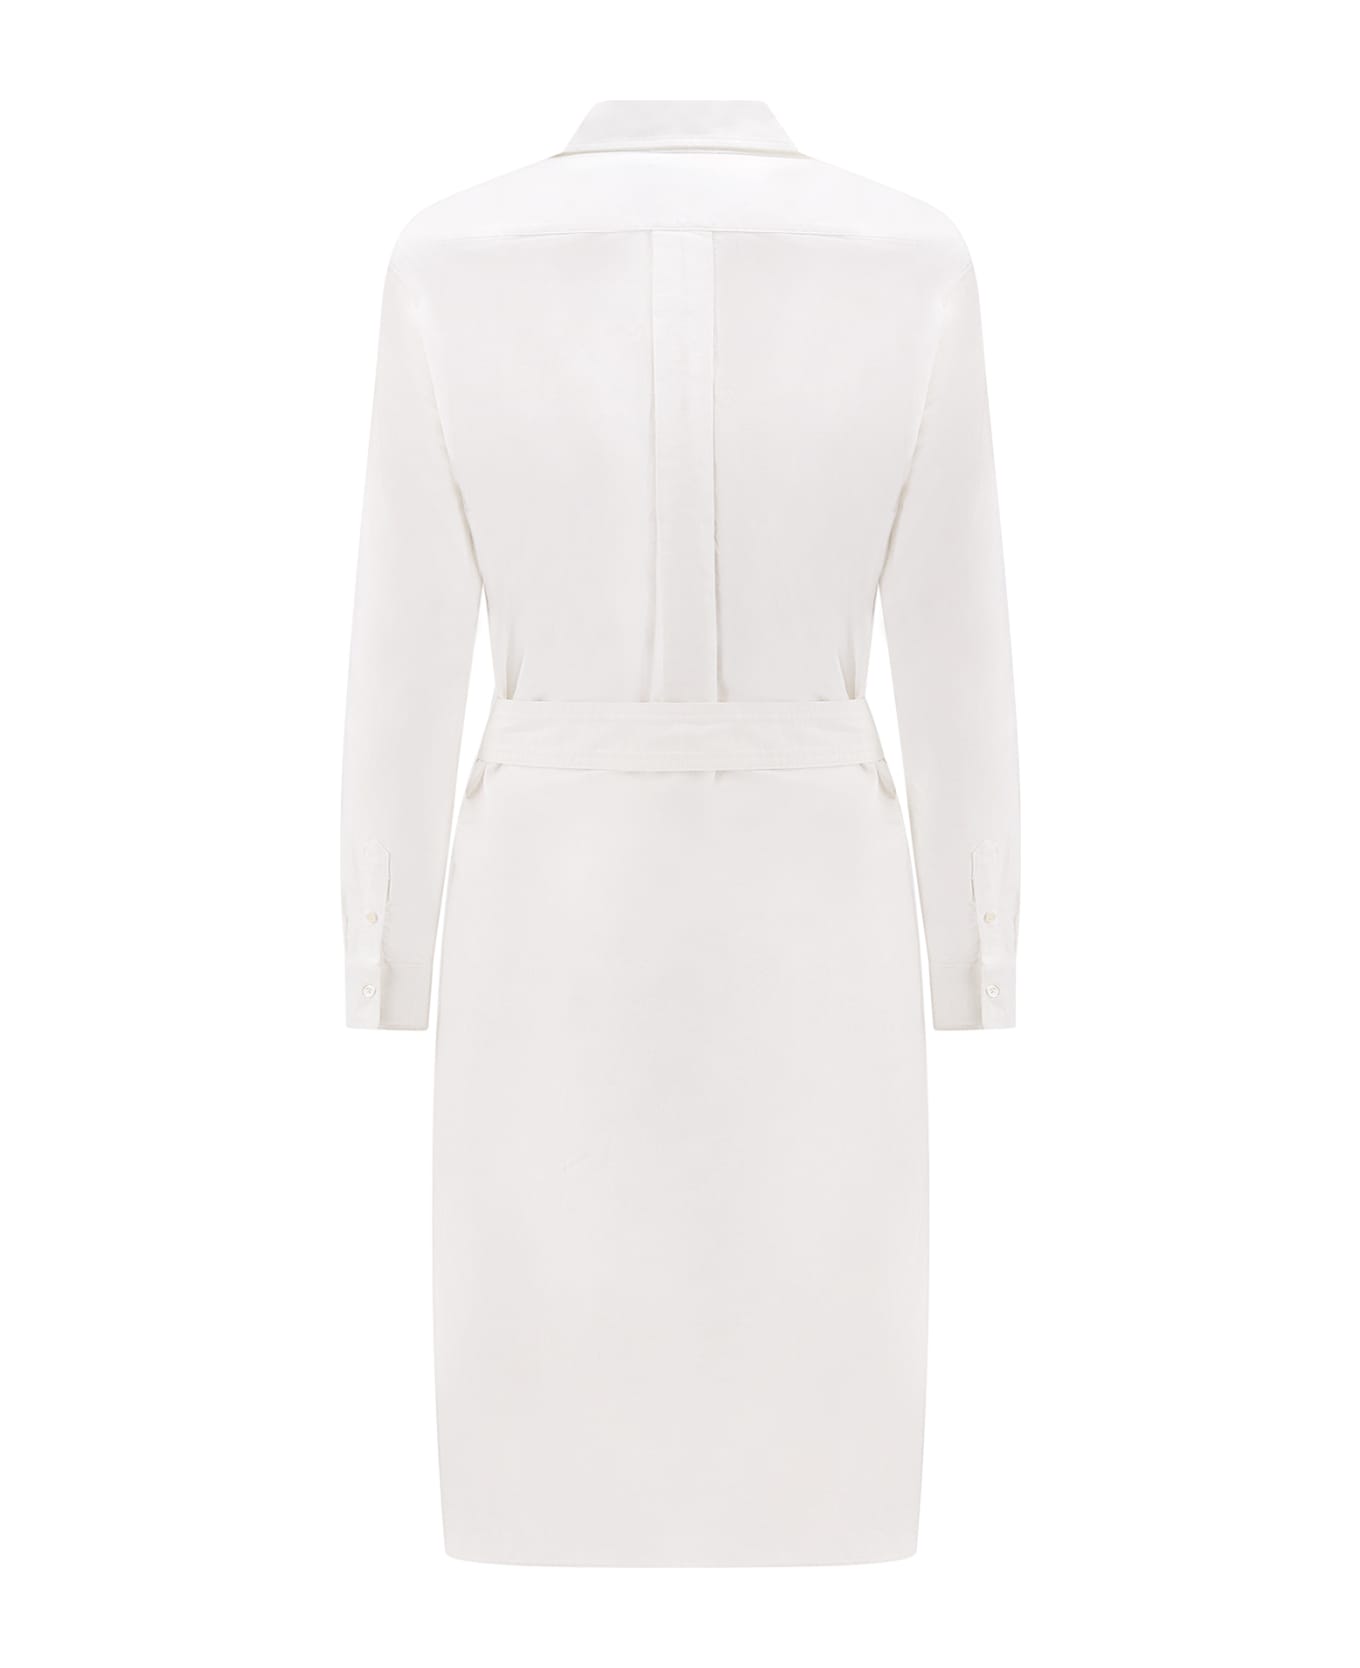 Ralph Lauren Dress - White